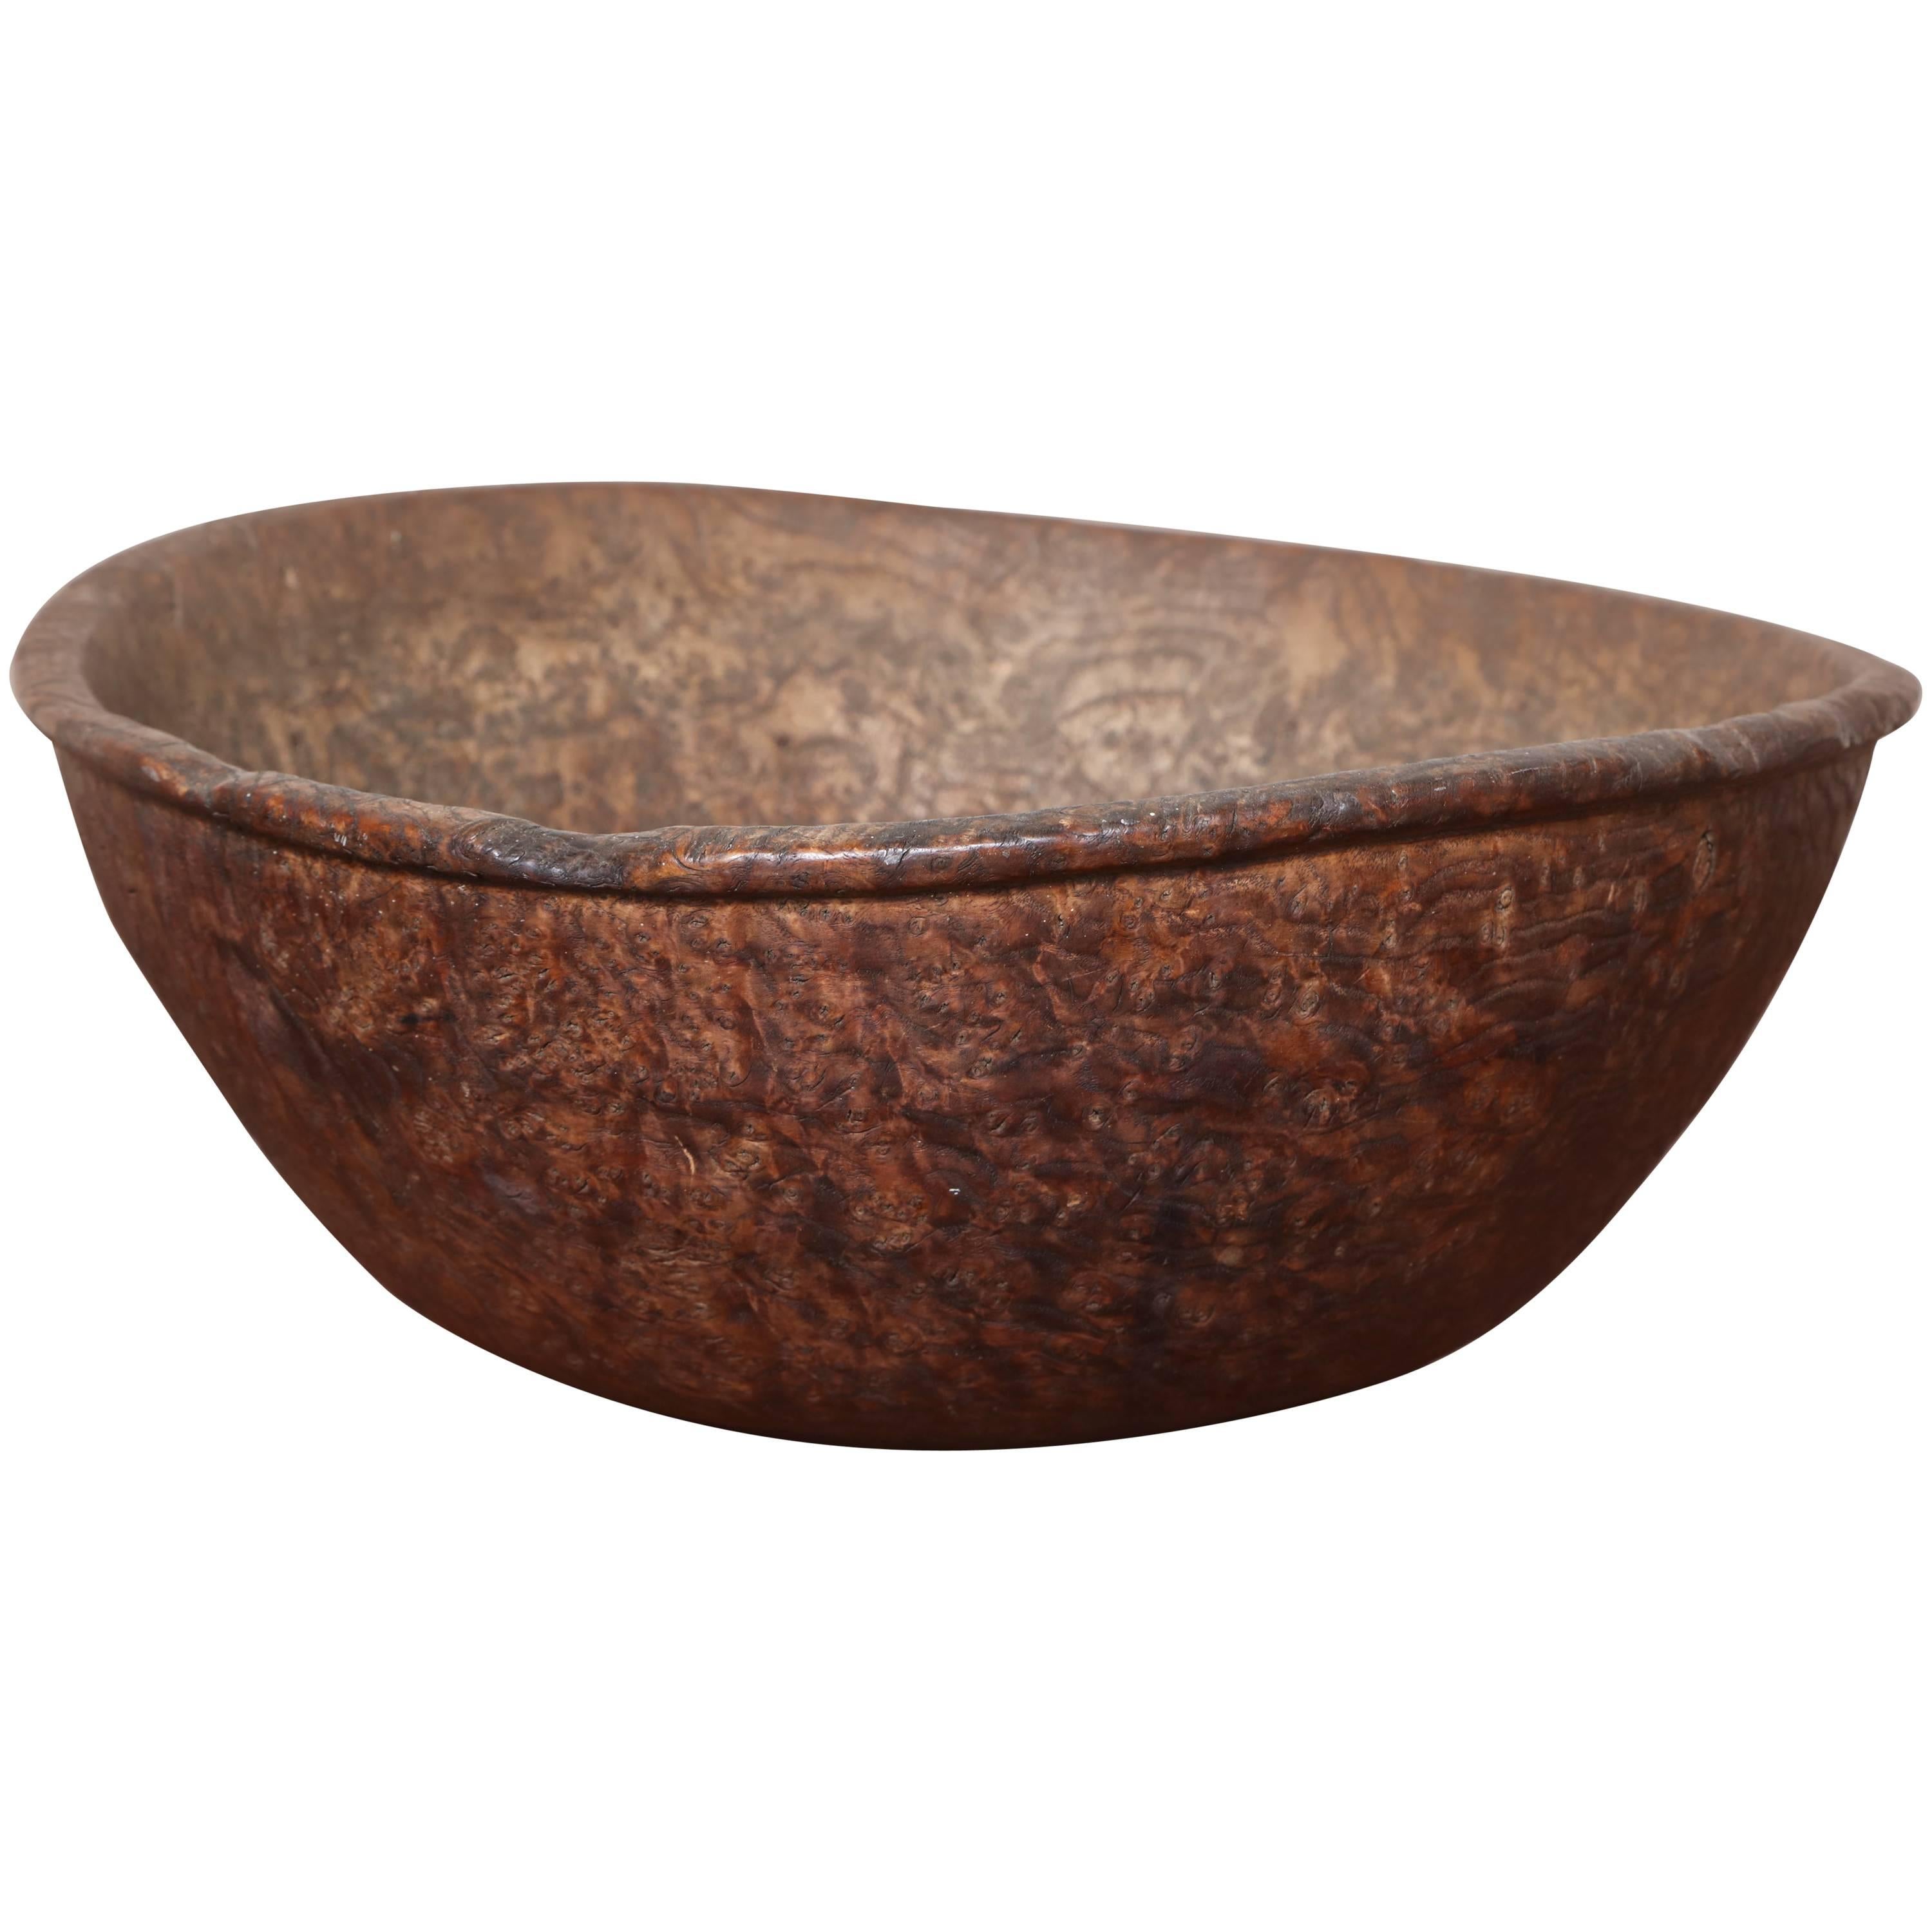 18th Century North American Burl Bowl